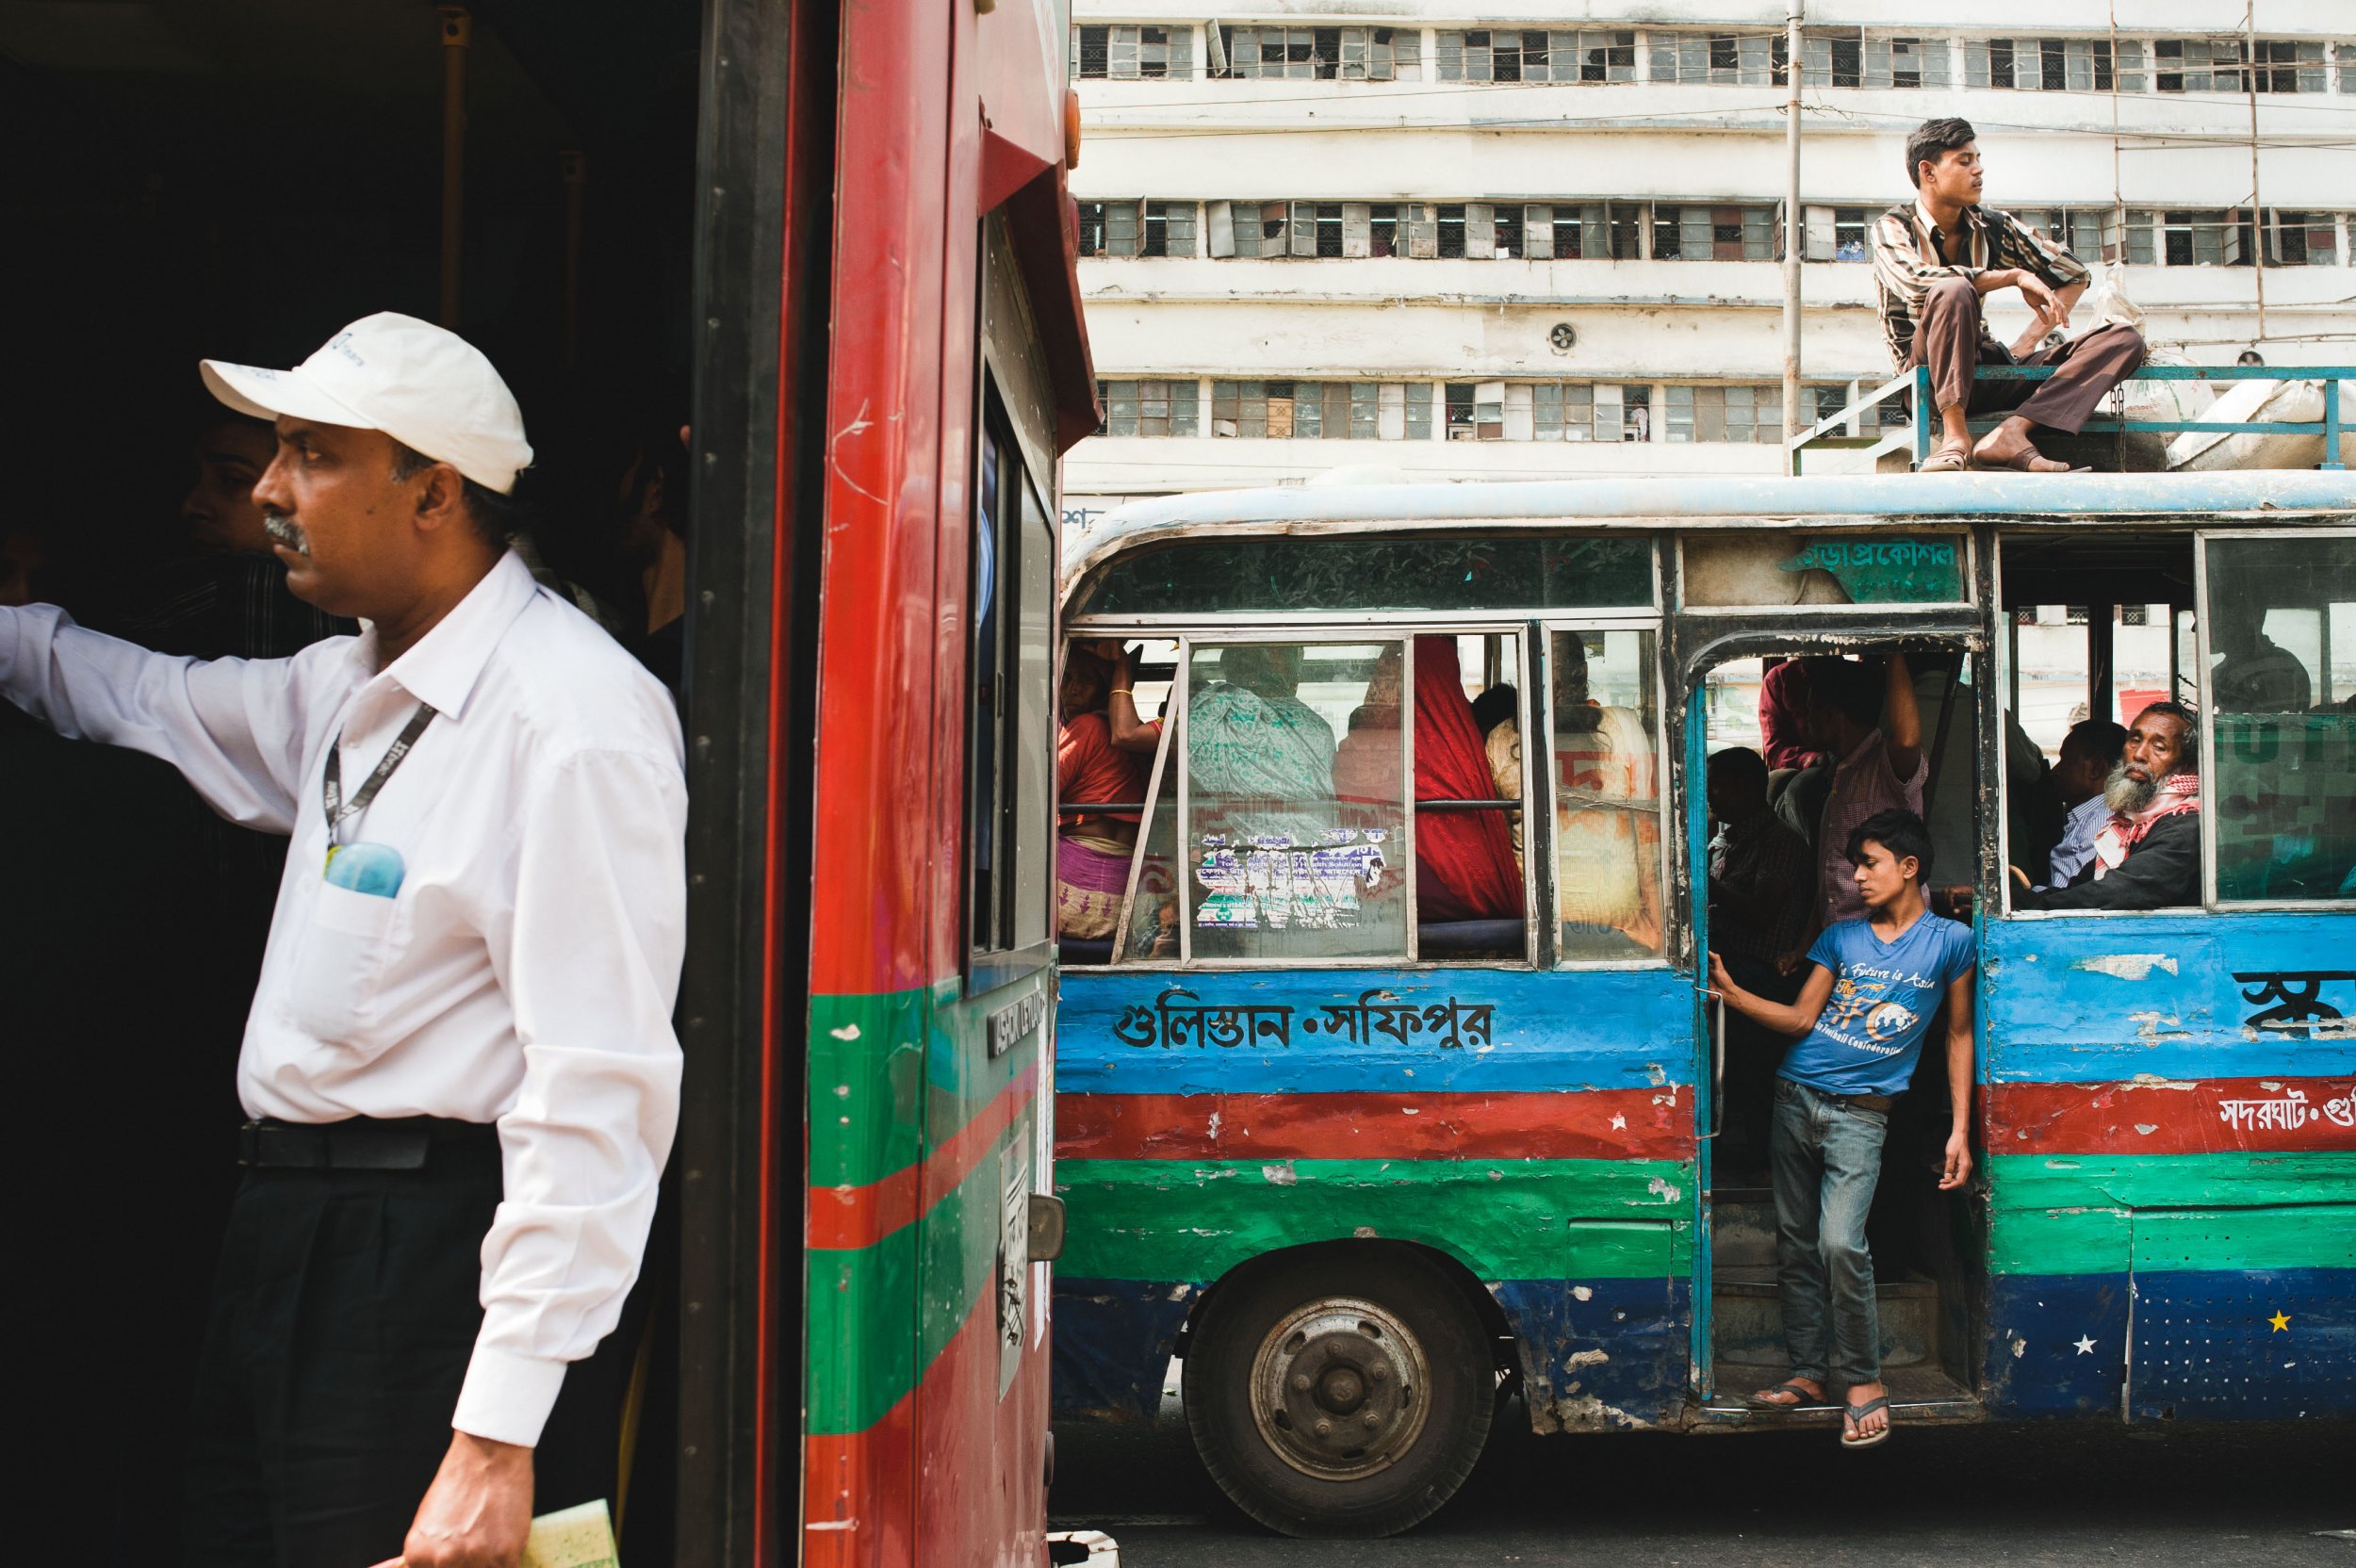 Men on buses, Dhaka